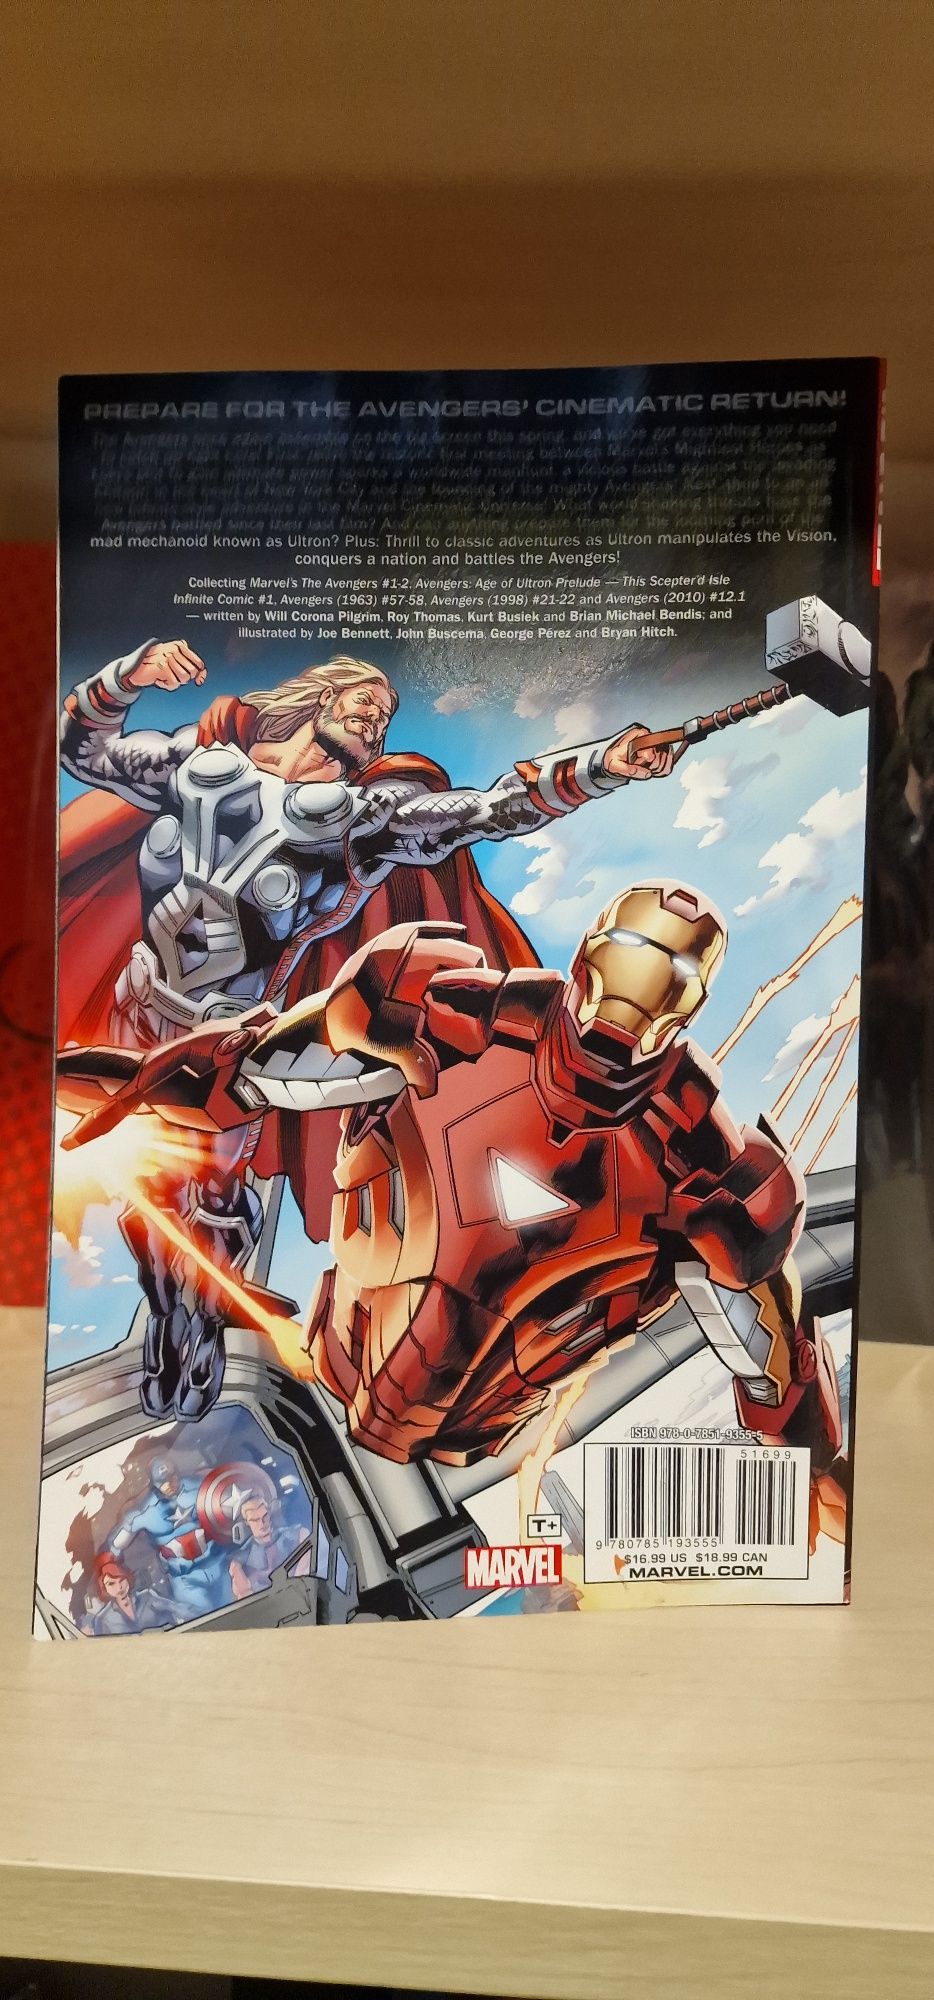 Avengers: Age of Ultron Prelude by Marvel Comic - EN